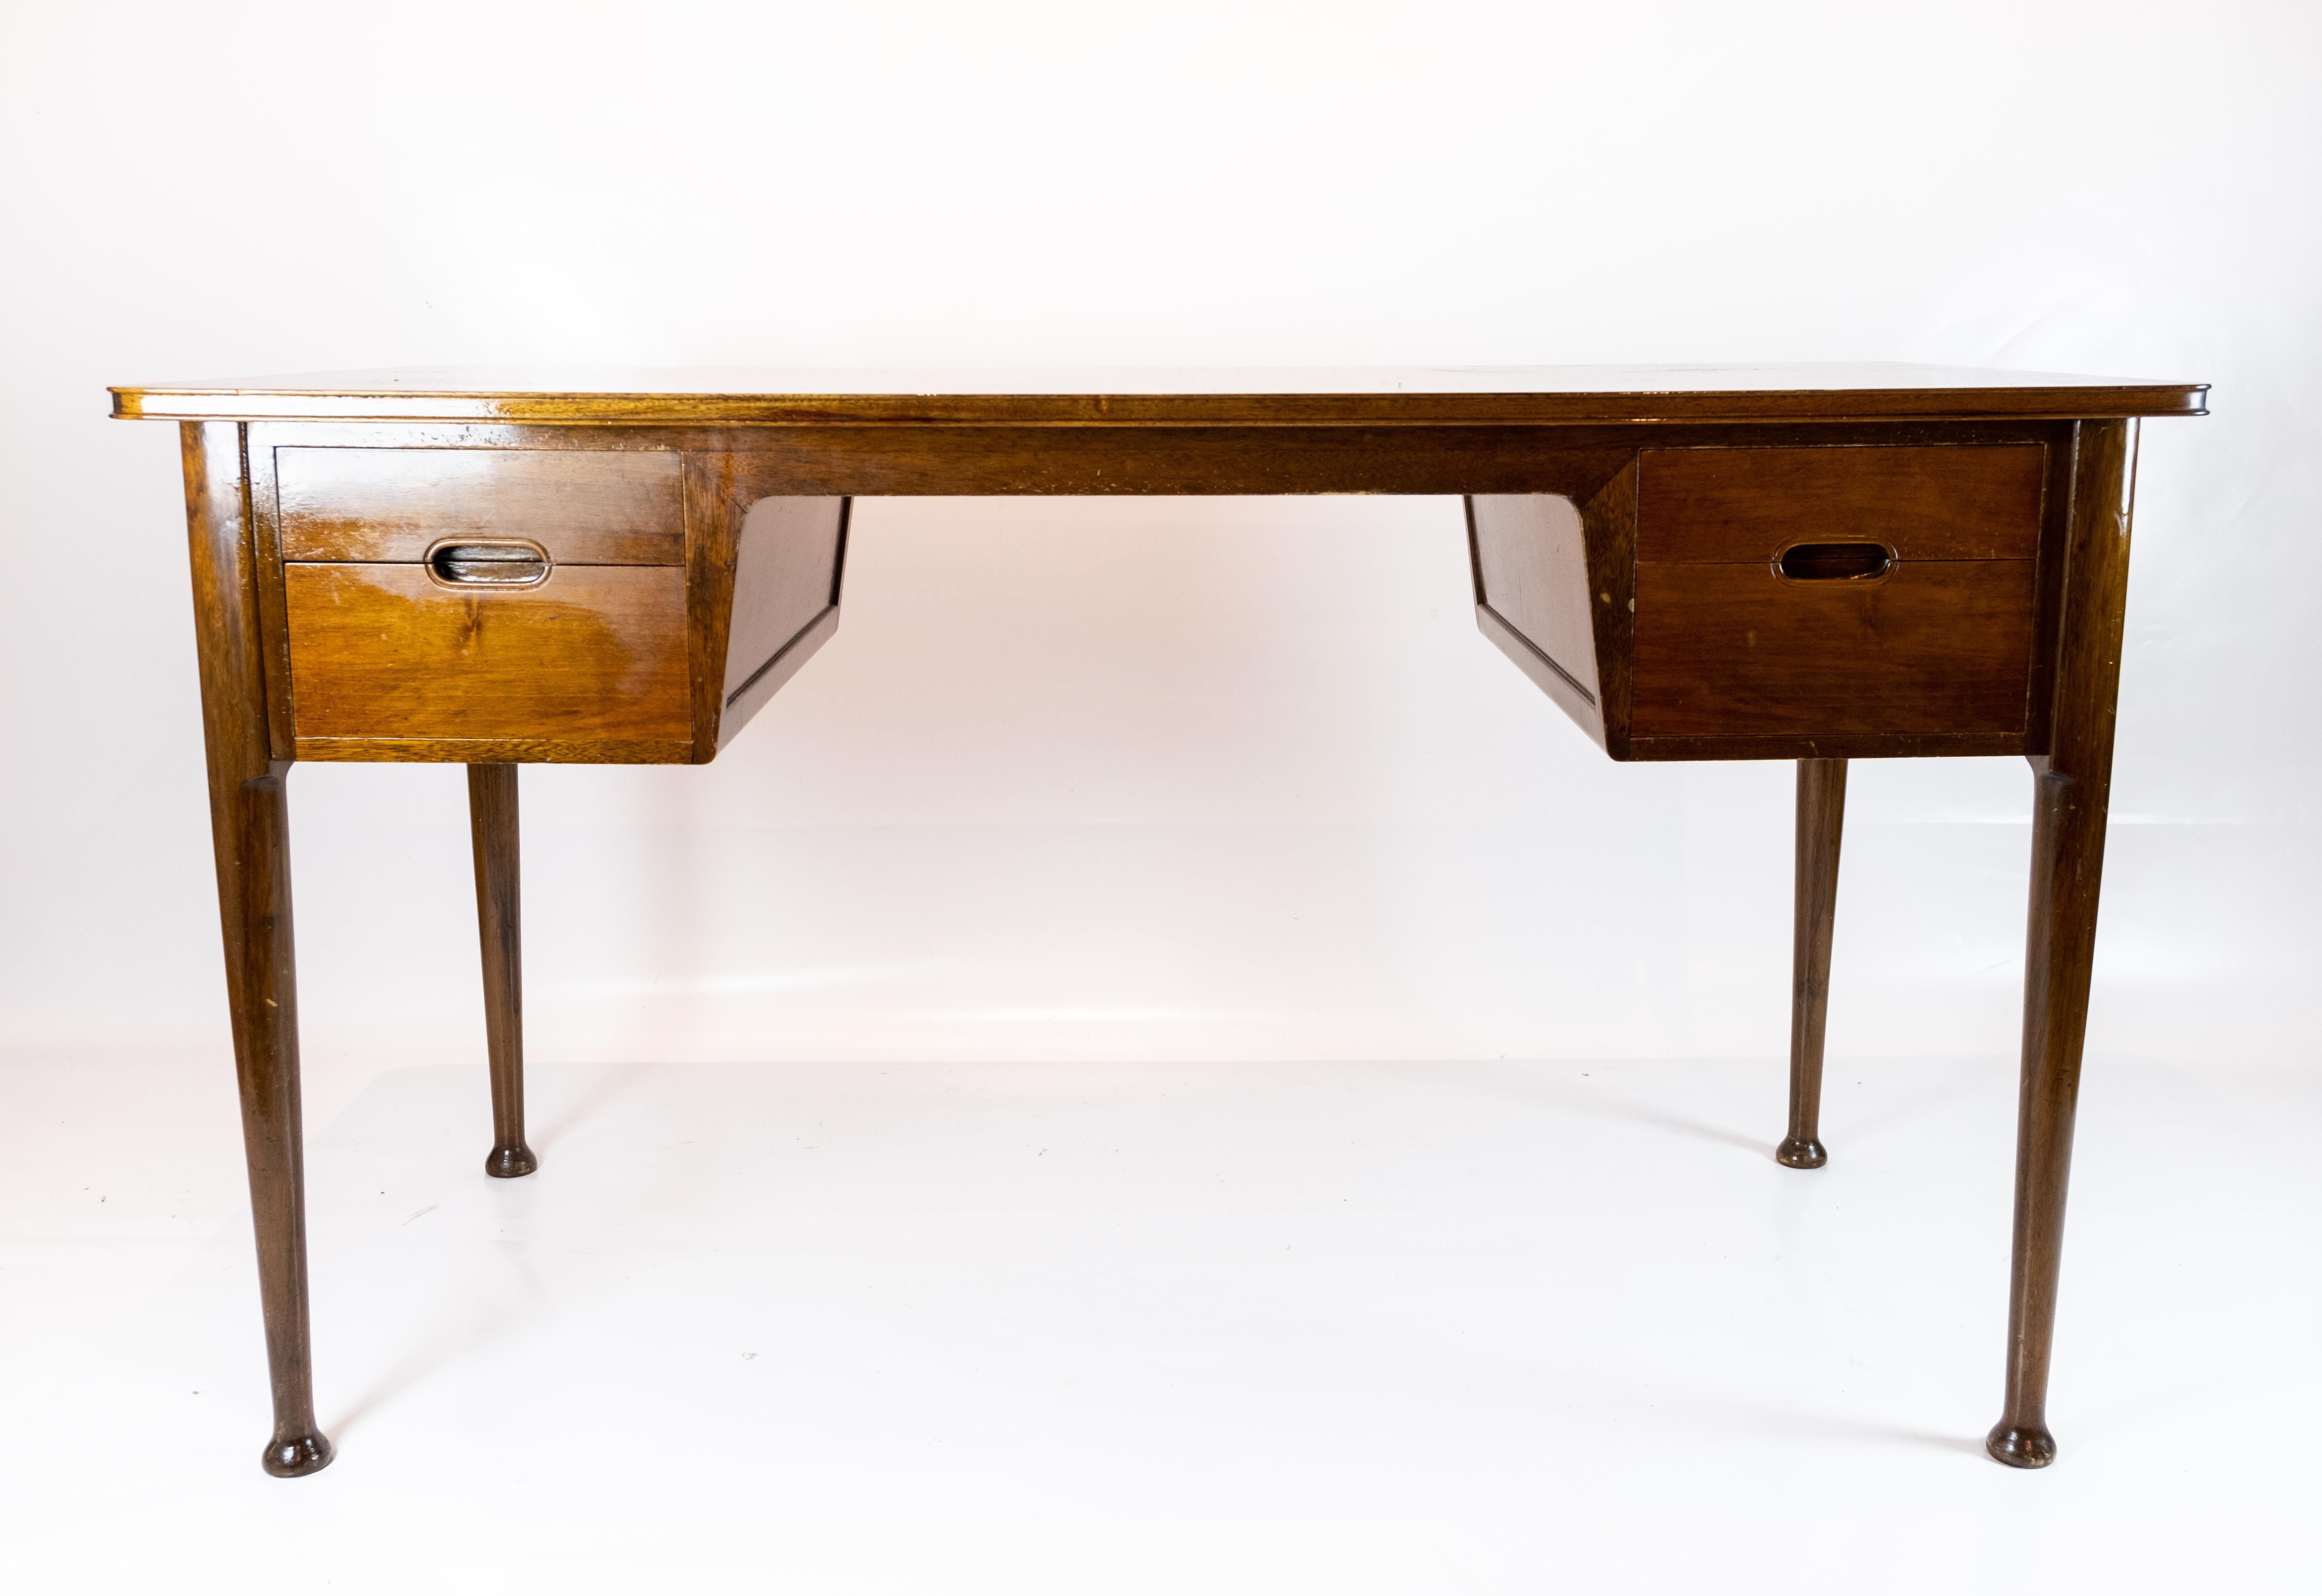 Scandinavian Modern Desk in Rosewood of Danish Design from the 1960s